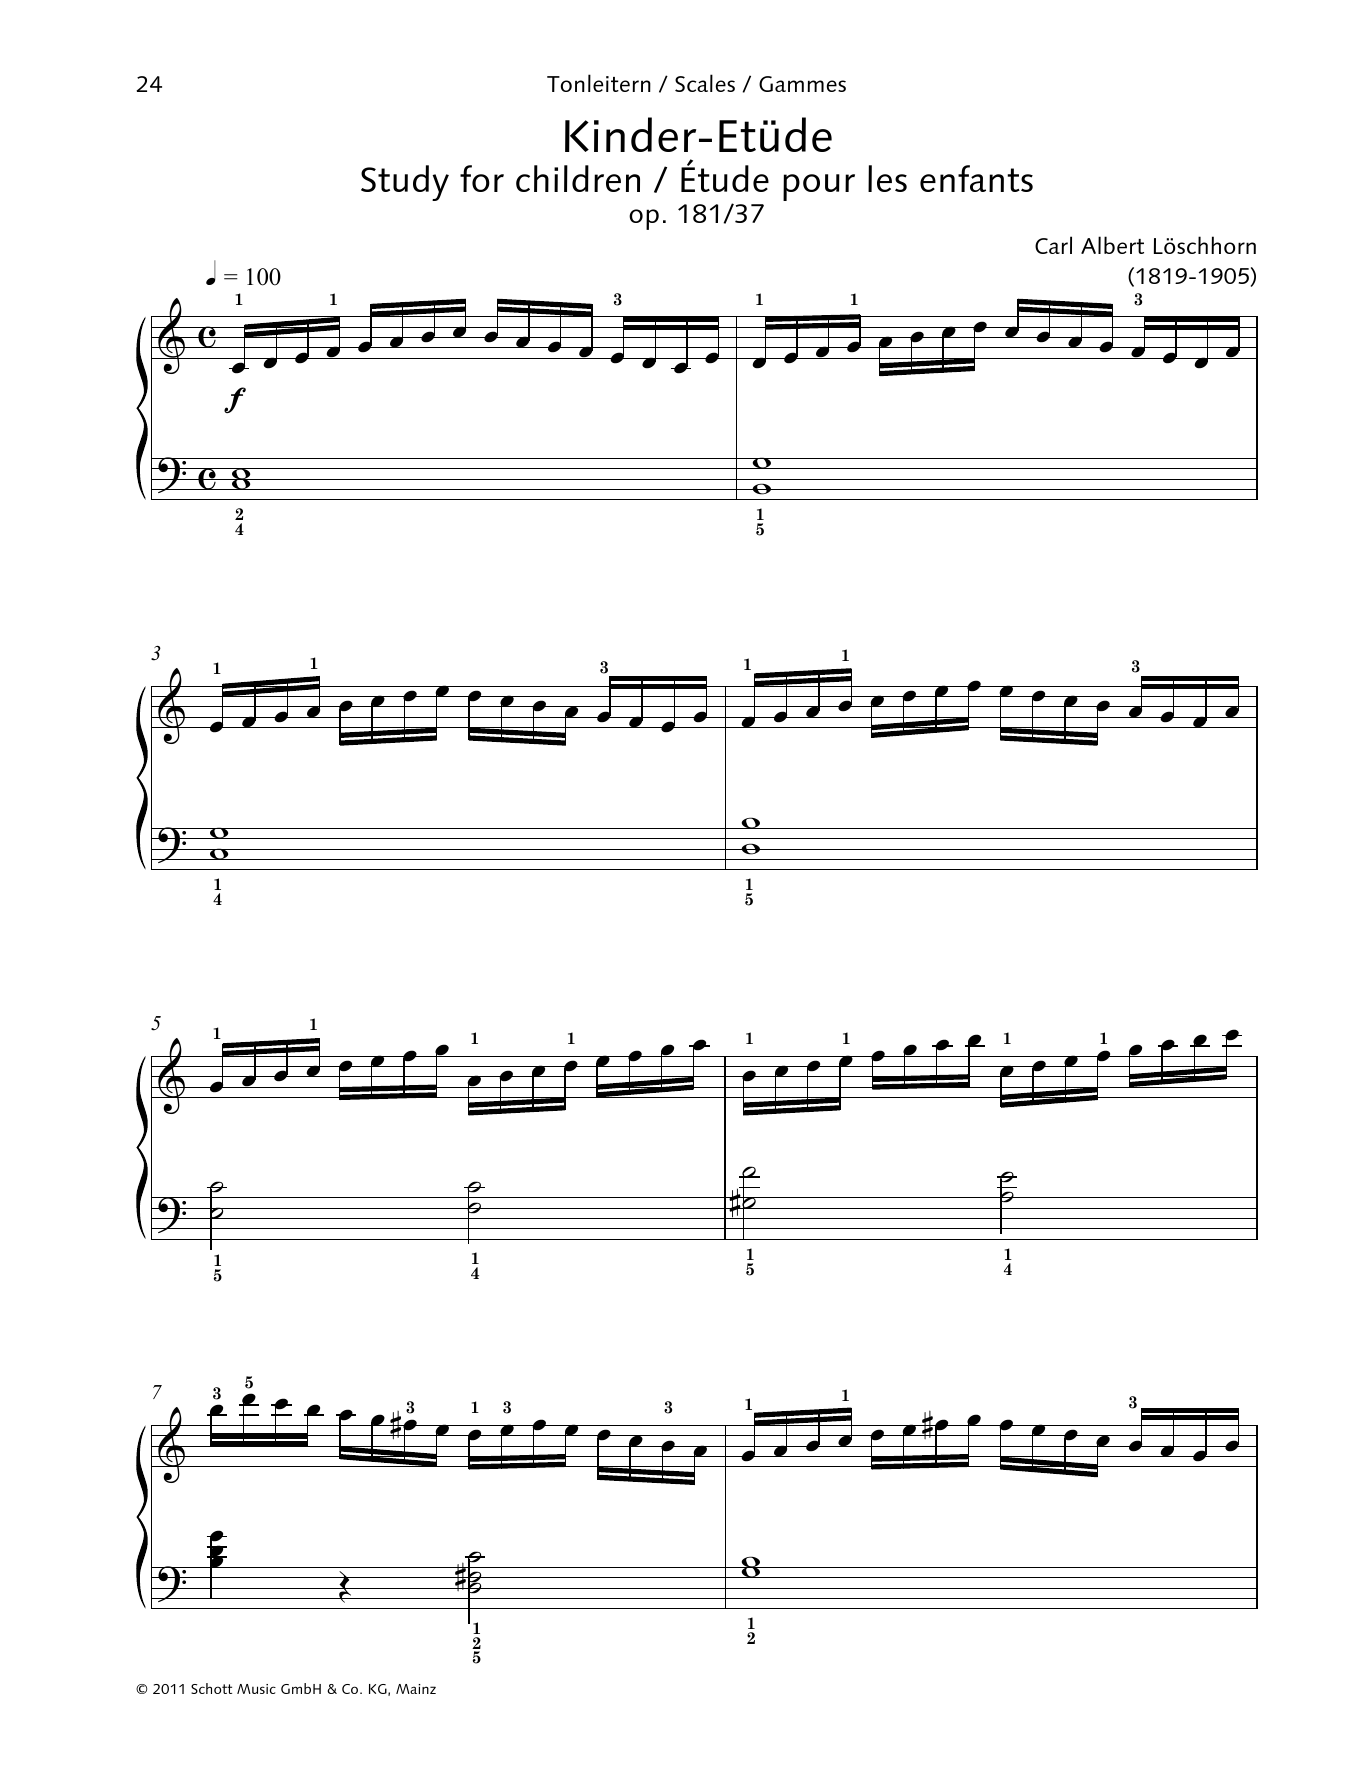 Download Carl Albert Loschhorn Study for children Sheet Music